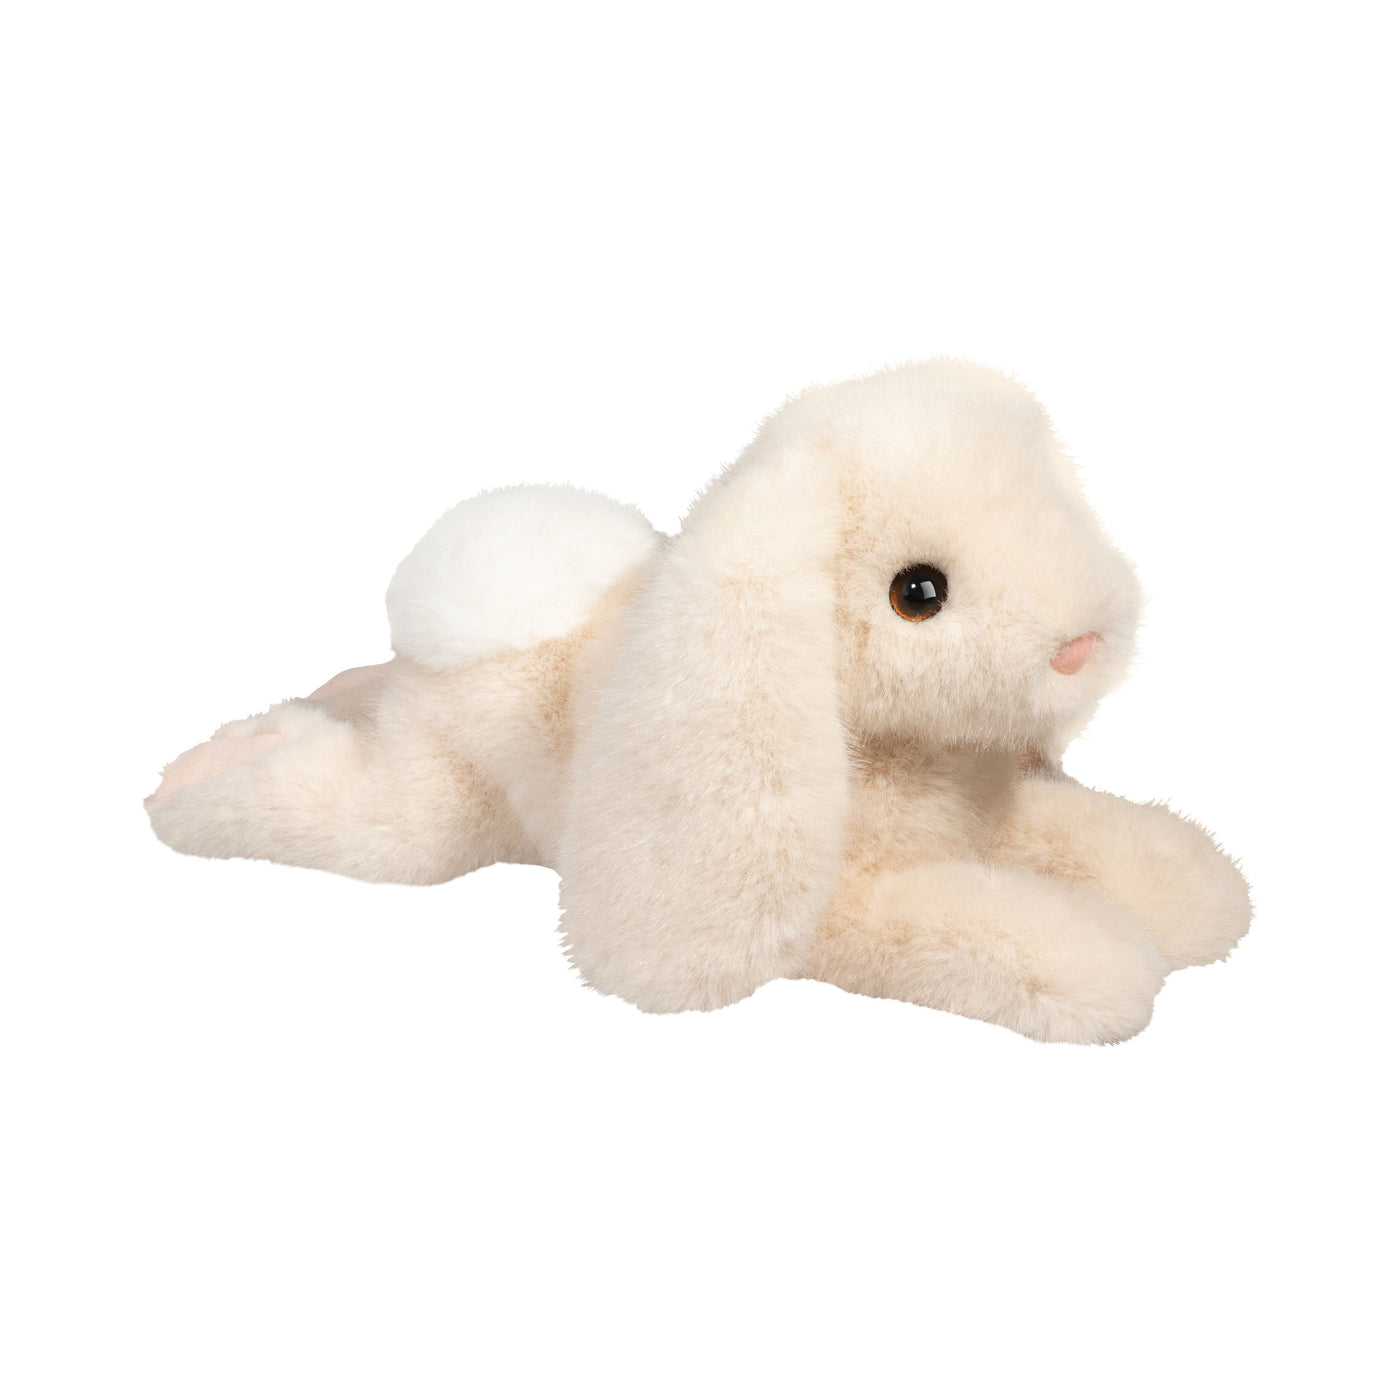 Clover the Cream Bunny Stuffed Animal